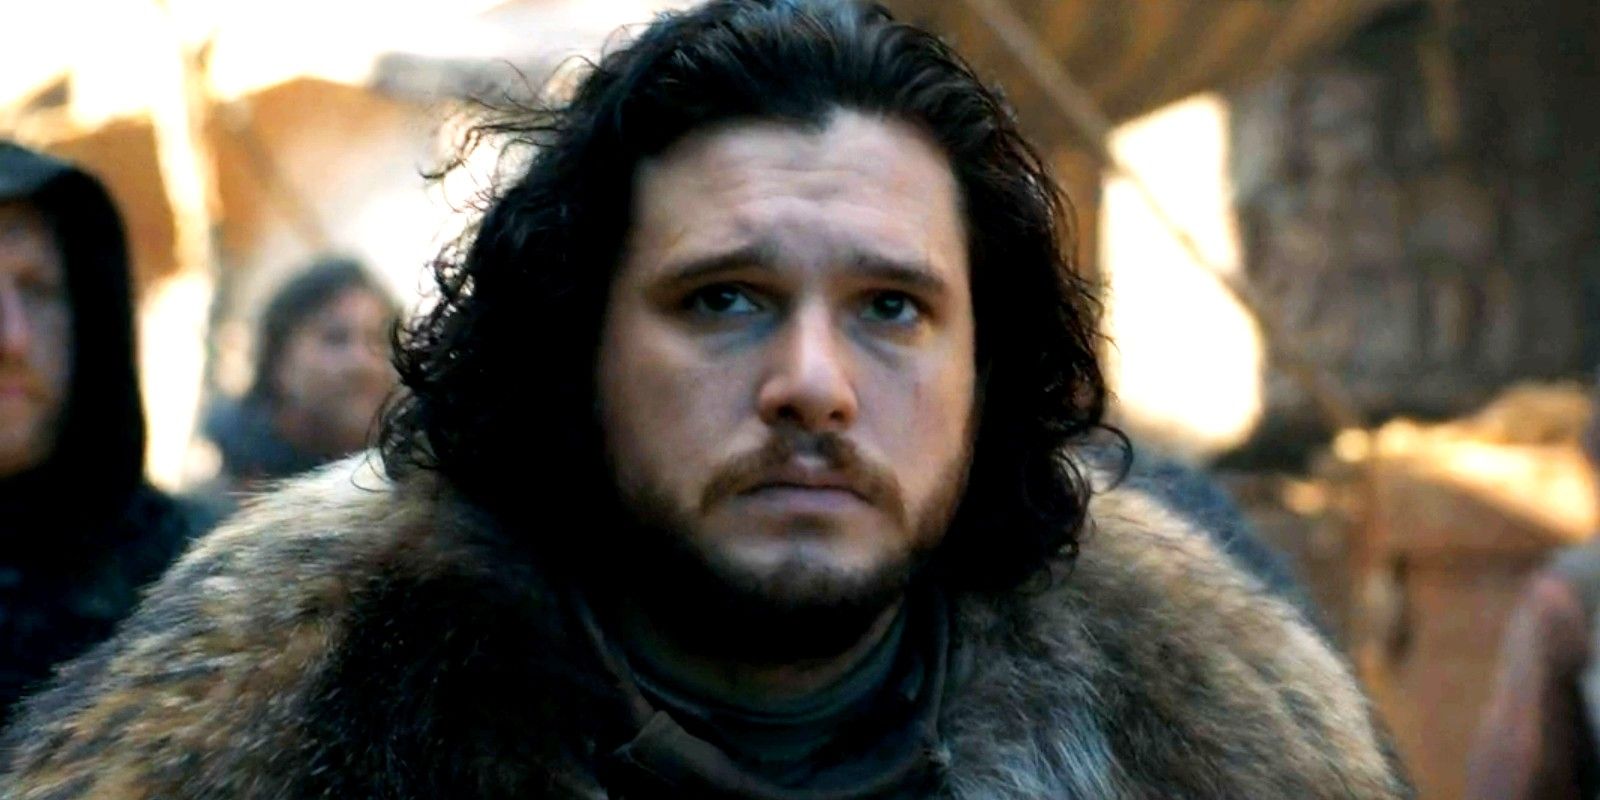 Jon Snow looking sad in Game of Thrones season 8